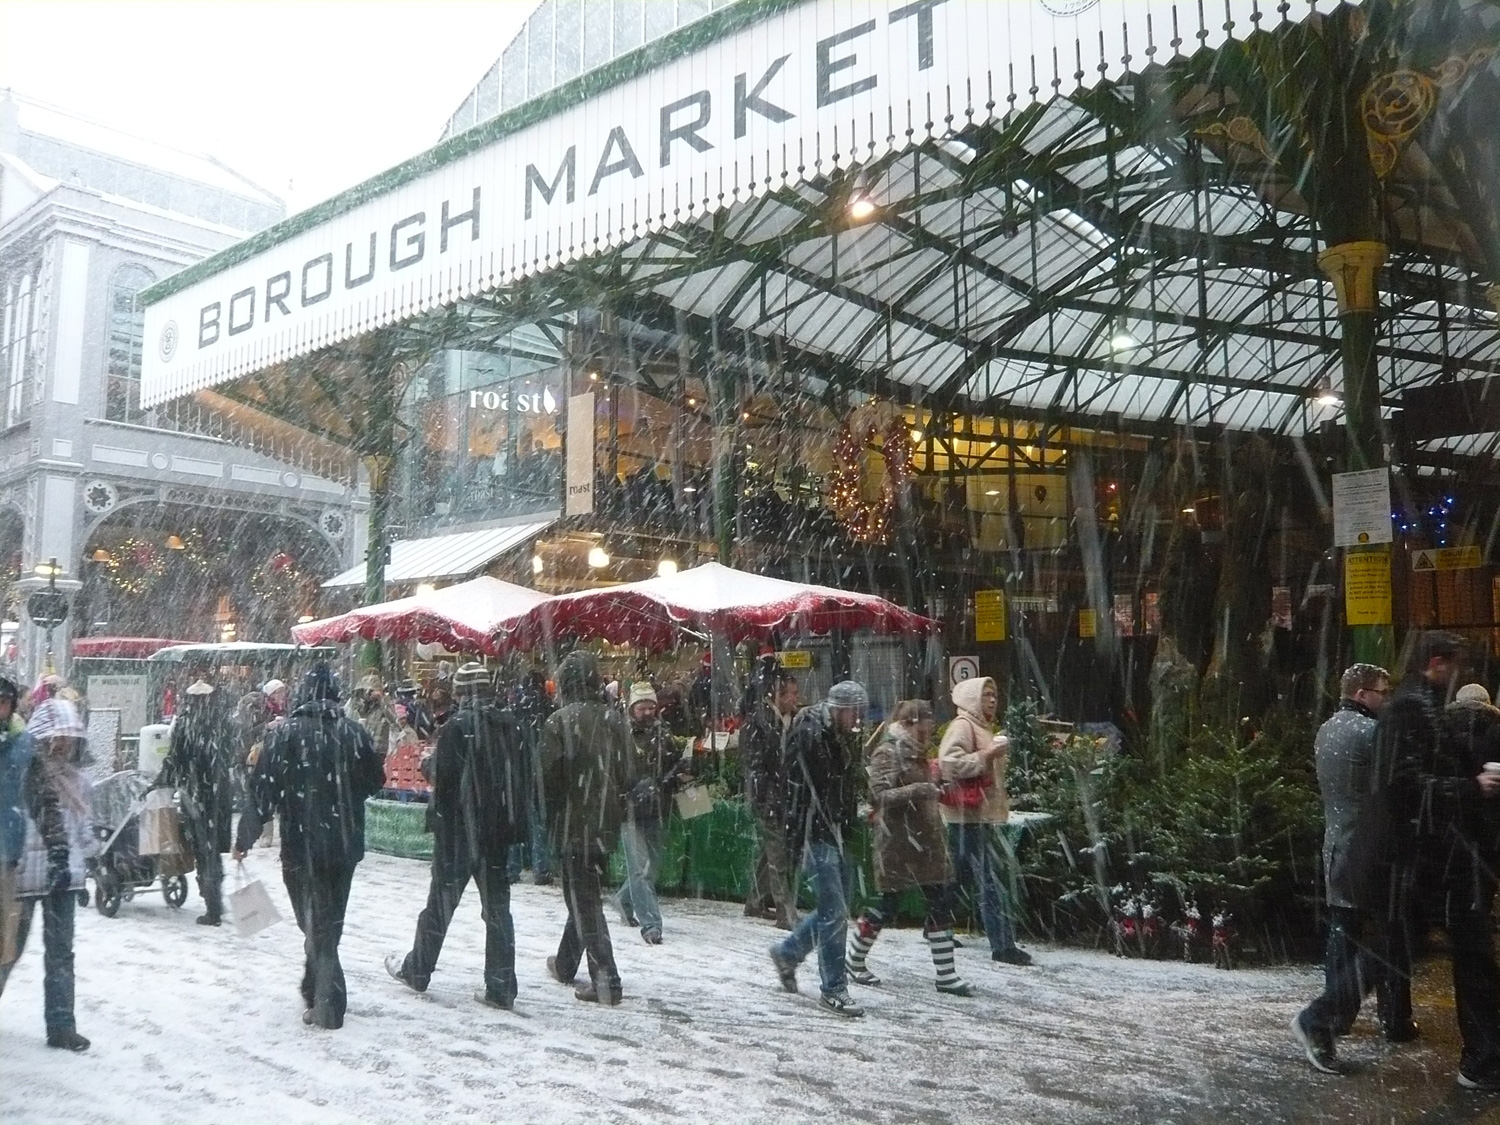 Snowy Borough Market